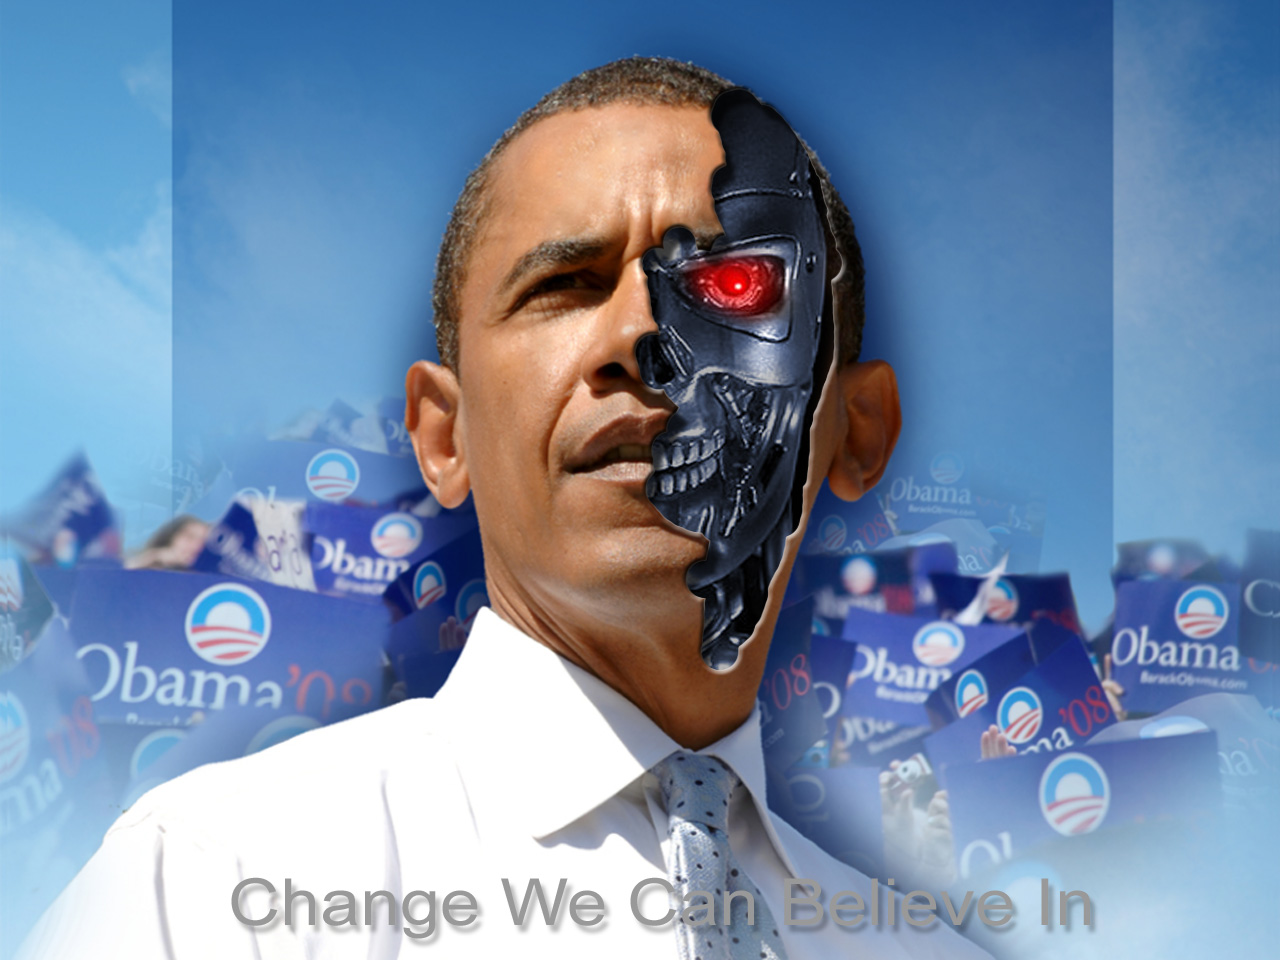 Barack Obama Wallpaper HD Background Photos